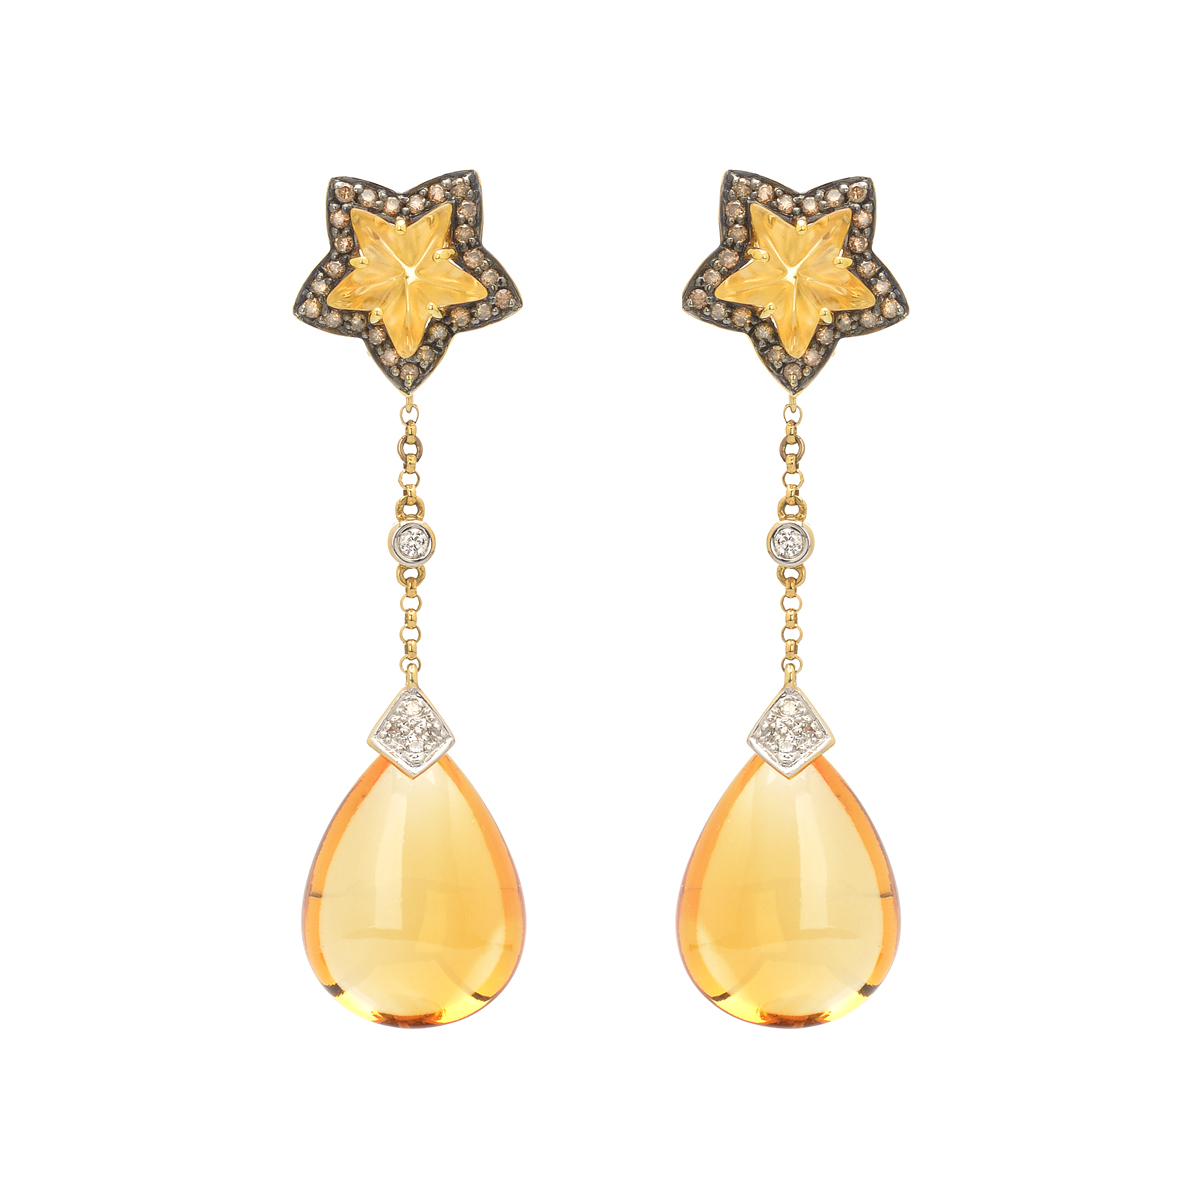 K18 YELLOW GOLD DIAMOND EARRINGS WITH SEMI-PRECIOUS STONES | Serkos